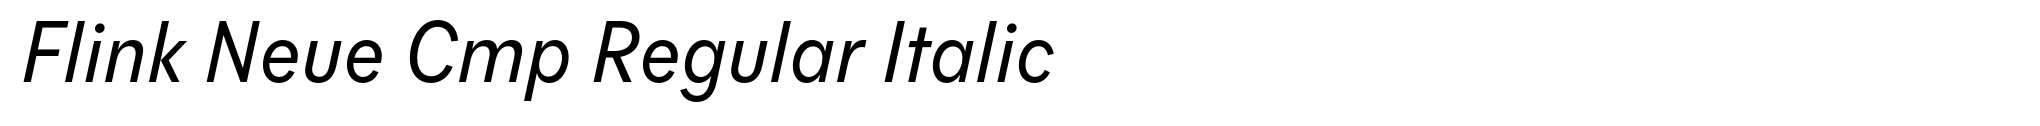 Flink Neue Cmp Regular Italic image